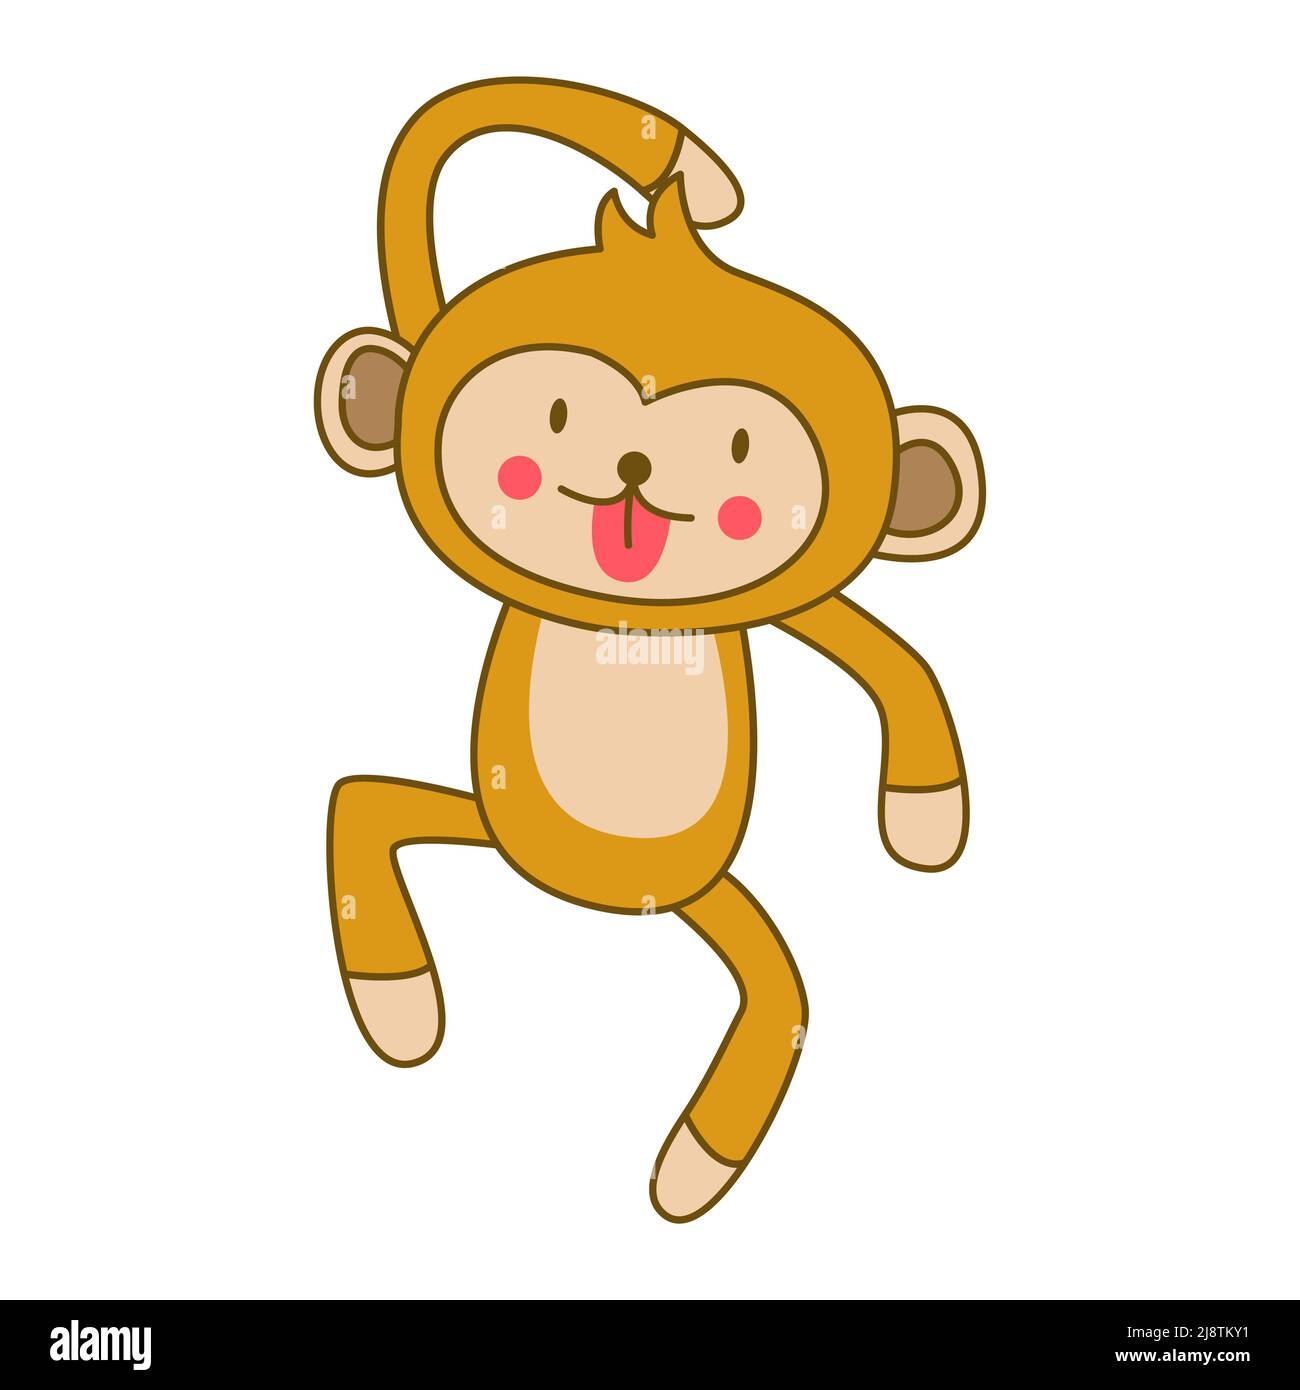 clip art of monkey with cartoon design,vector illustration Stock Vector